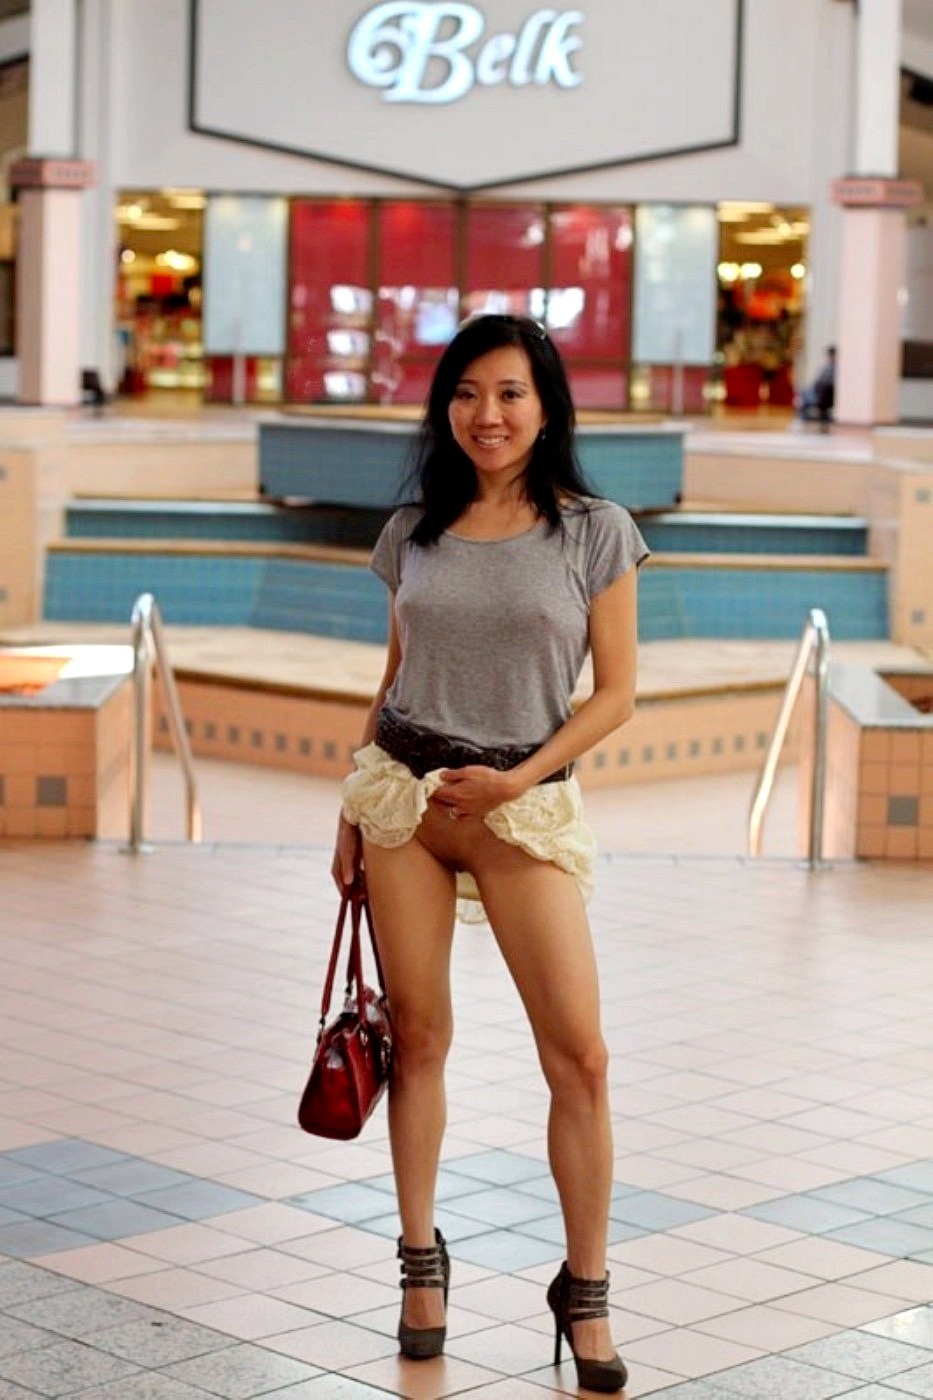 Upskirts at the mall